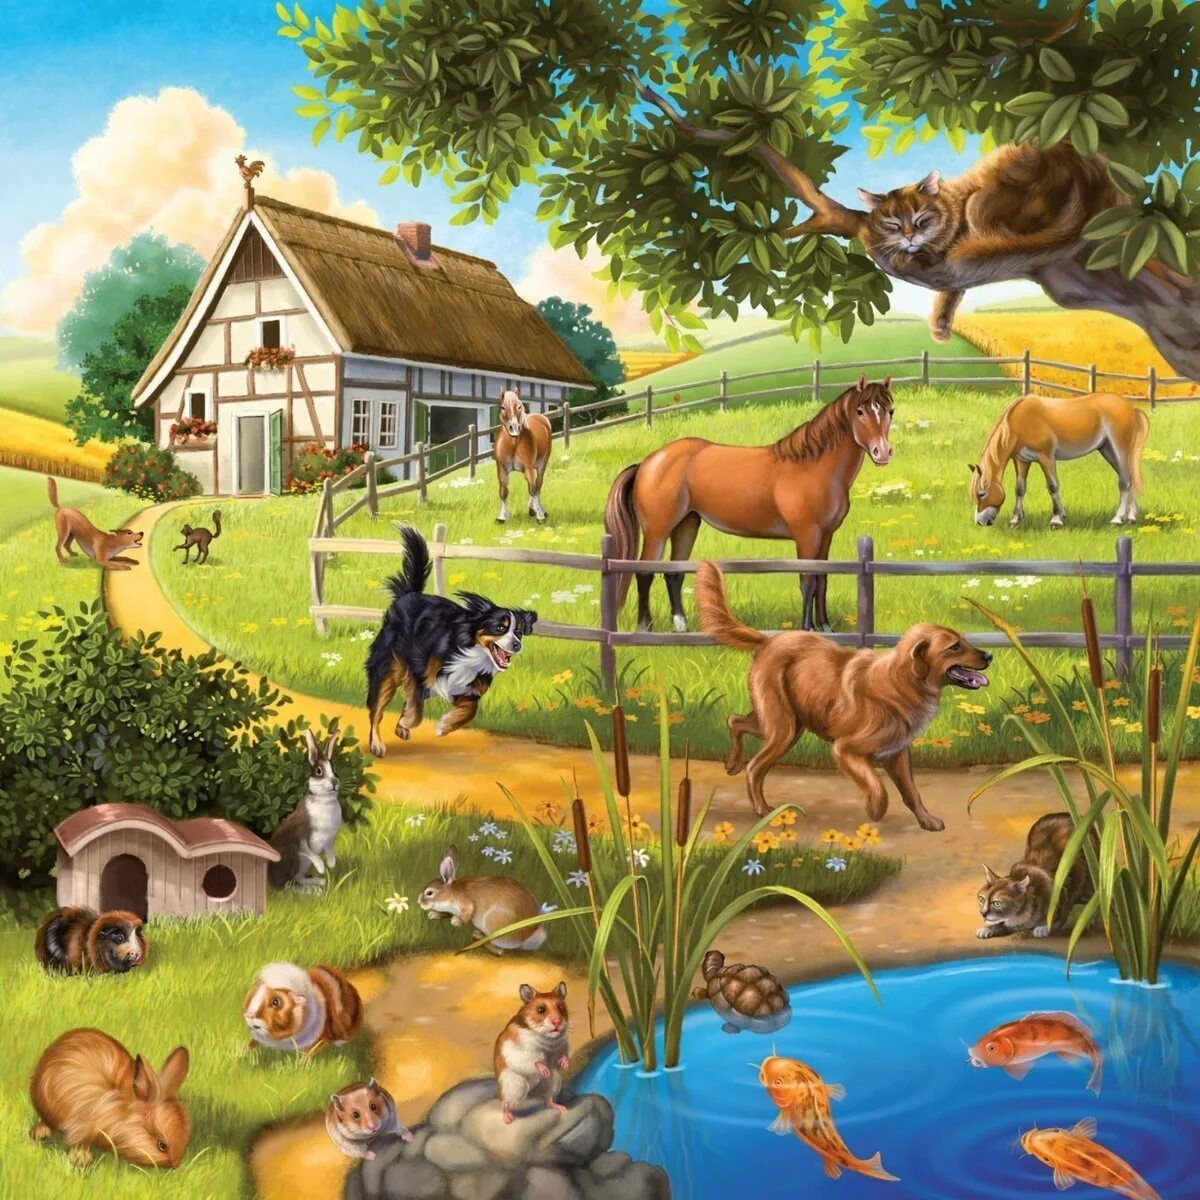 Домашние обитатели. Животные на ферме. Домашние животные на ферме. Домашние животные для детей. Домашние животные домики.